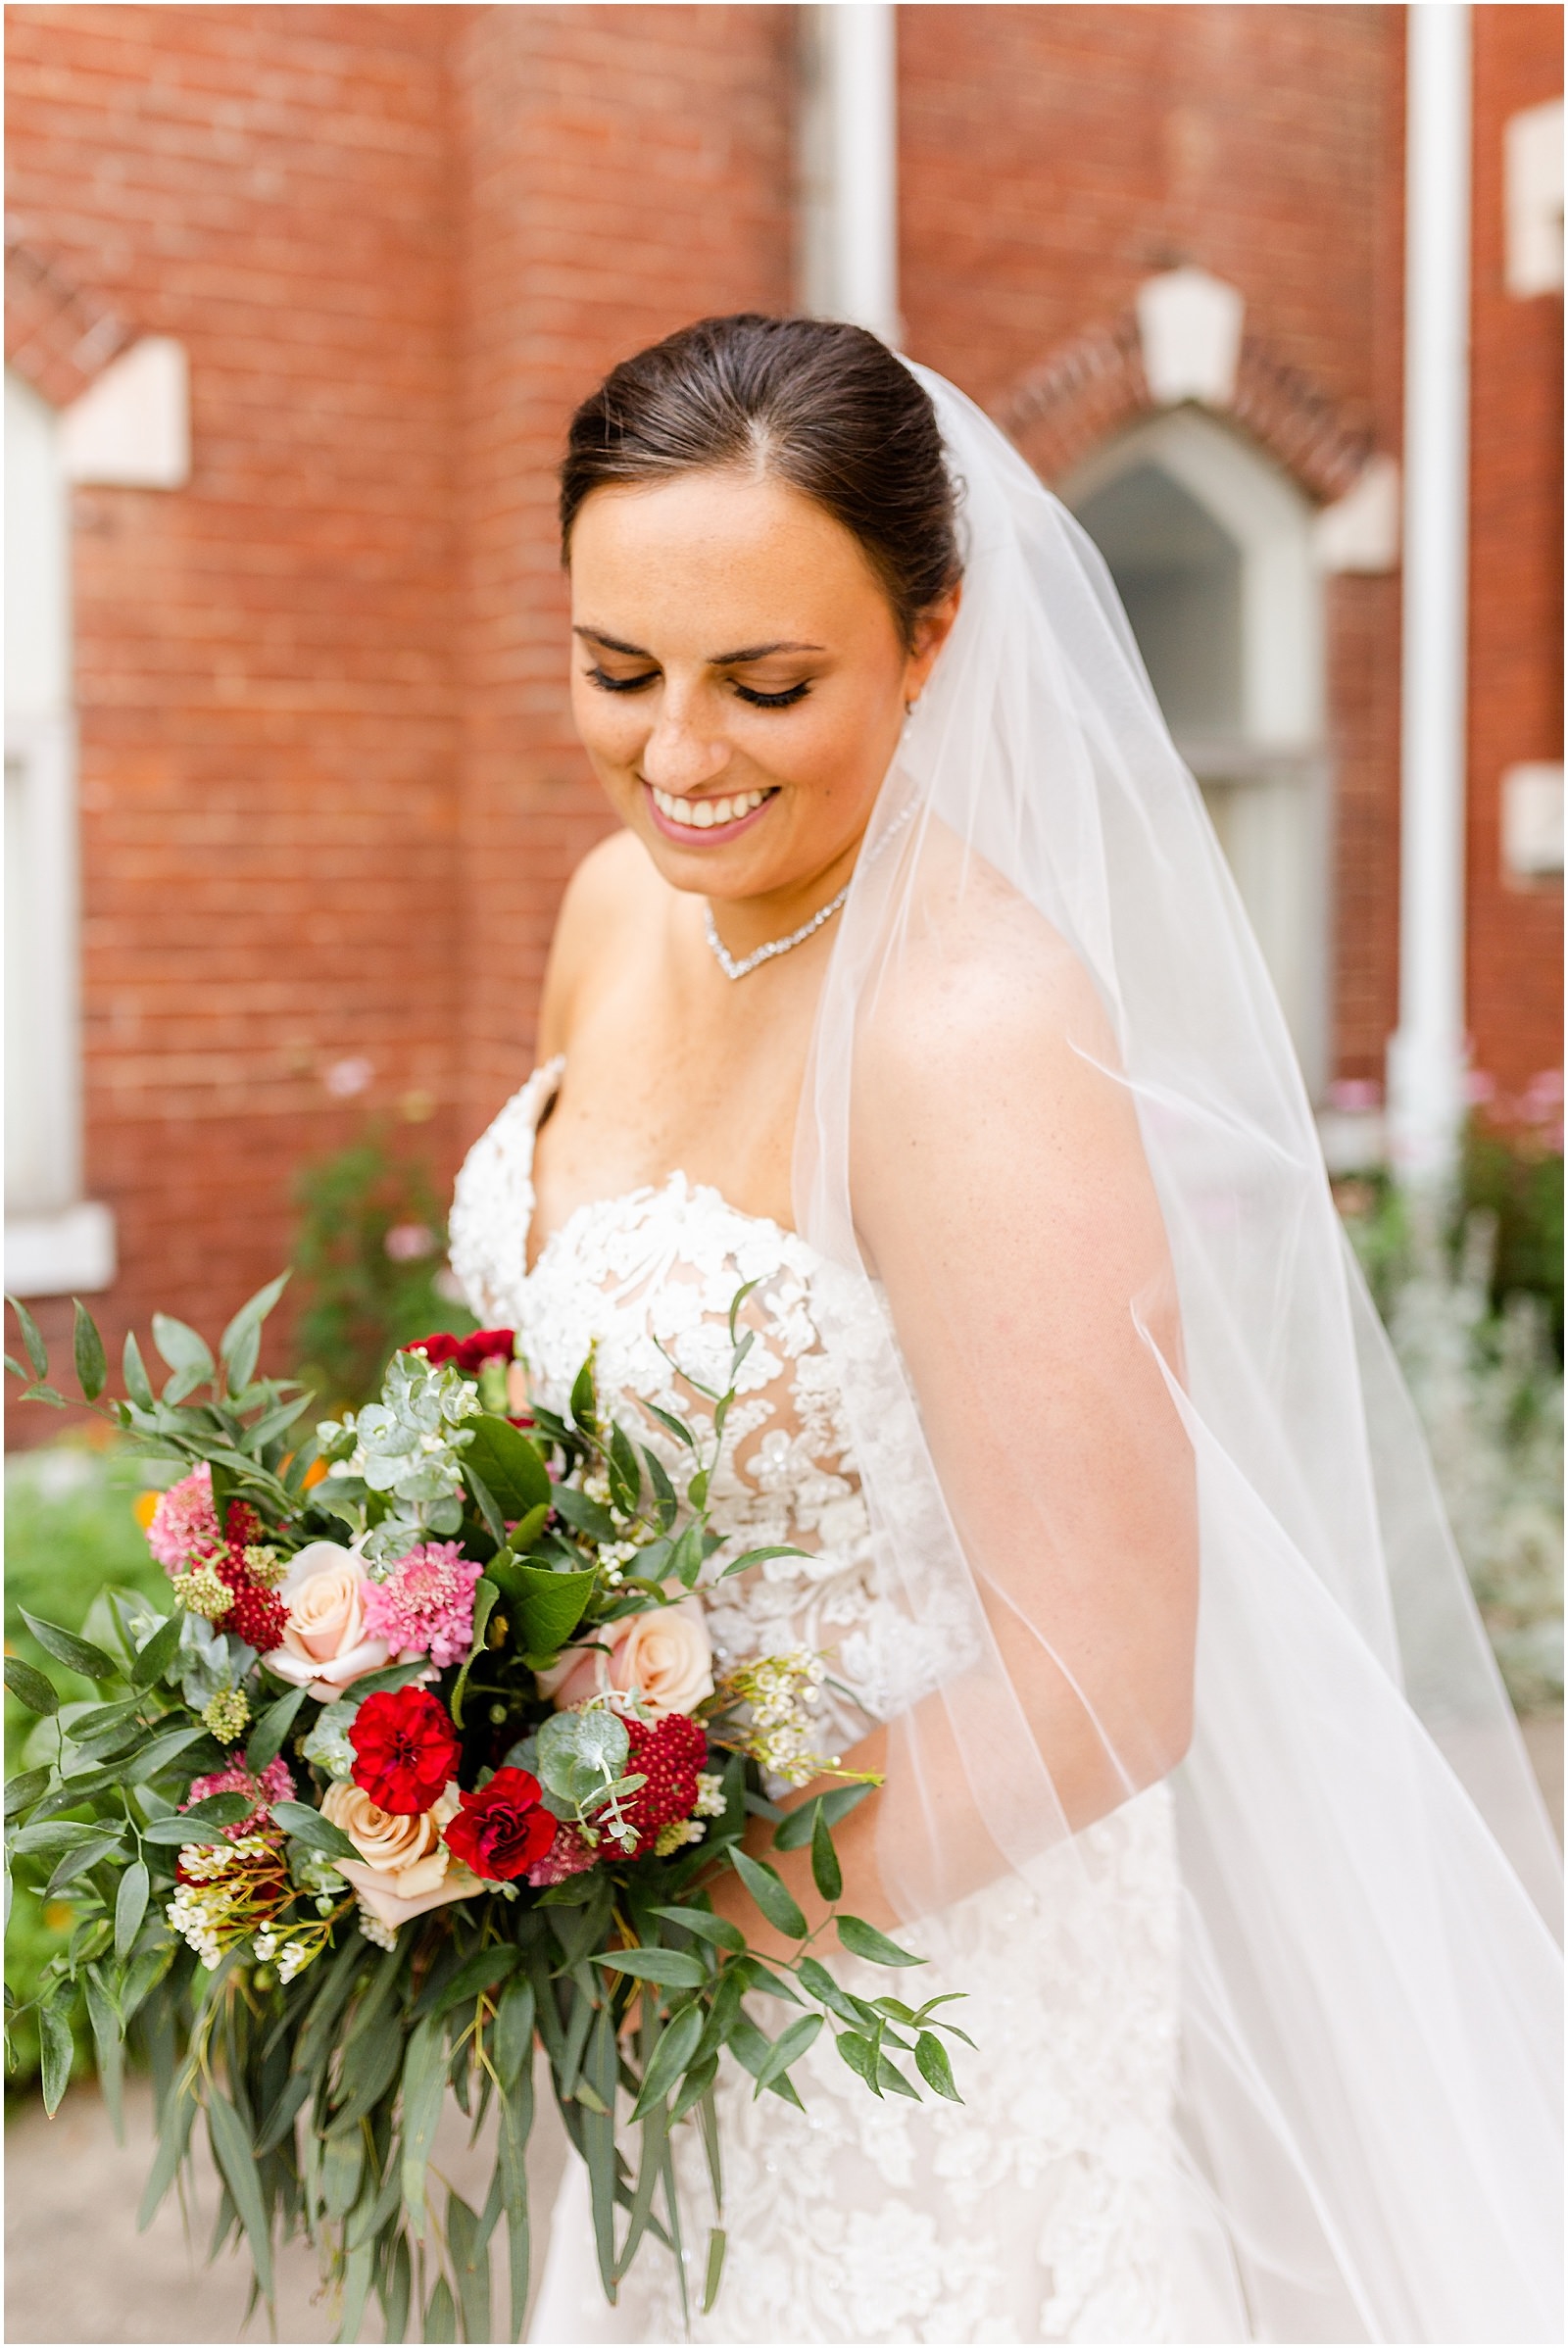 Deidra and Andrew | A Huntingburgh Indiana Wedding Bret and Brandie | Evansville Photographers | @bretandbrandie-0072.jpg